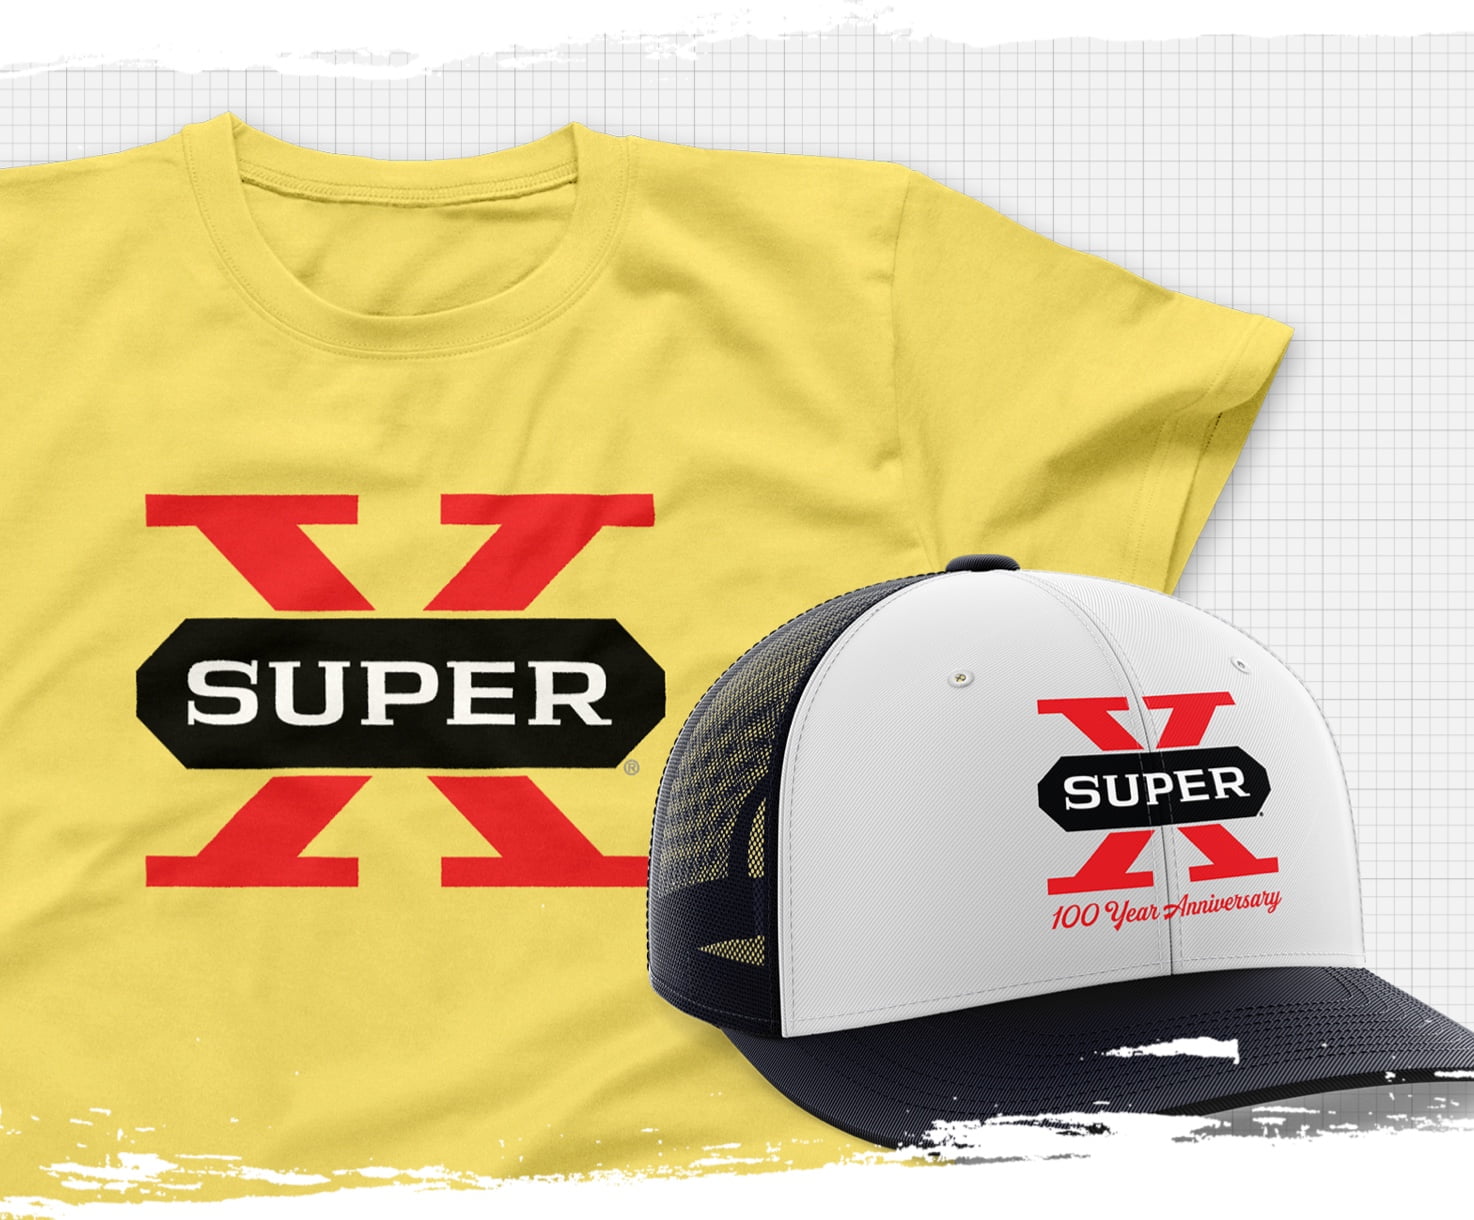 Super-X merchandise